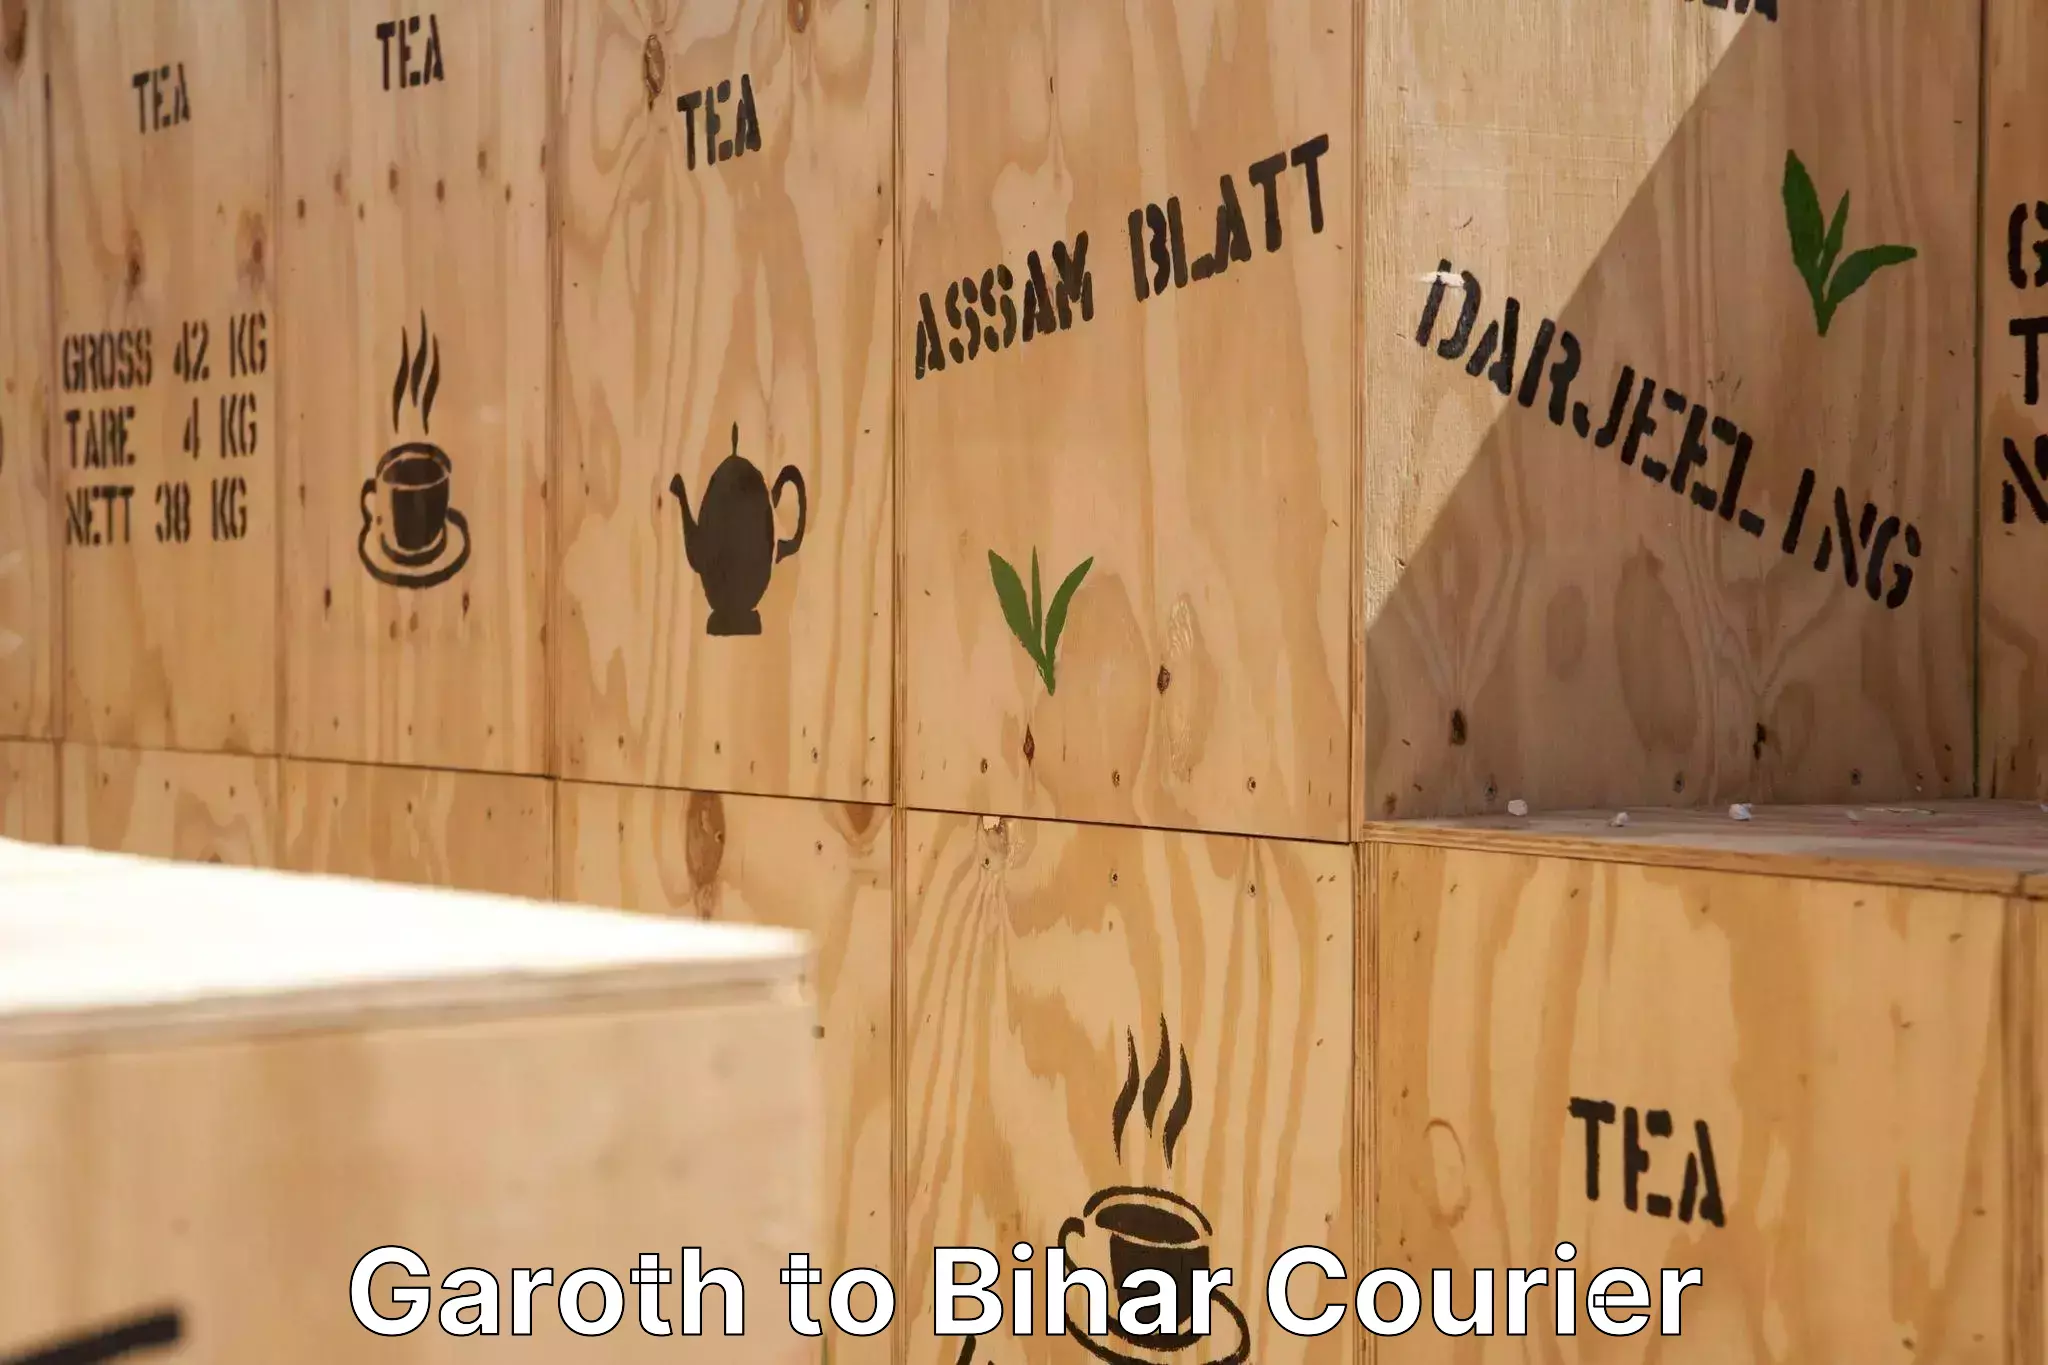 Professional moving company Garoth to Dhaka